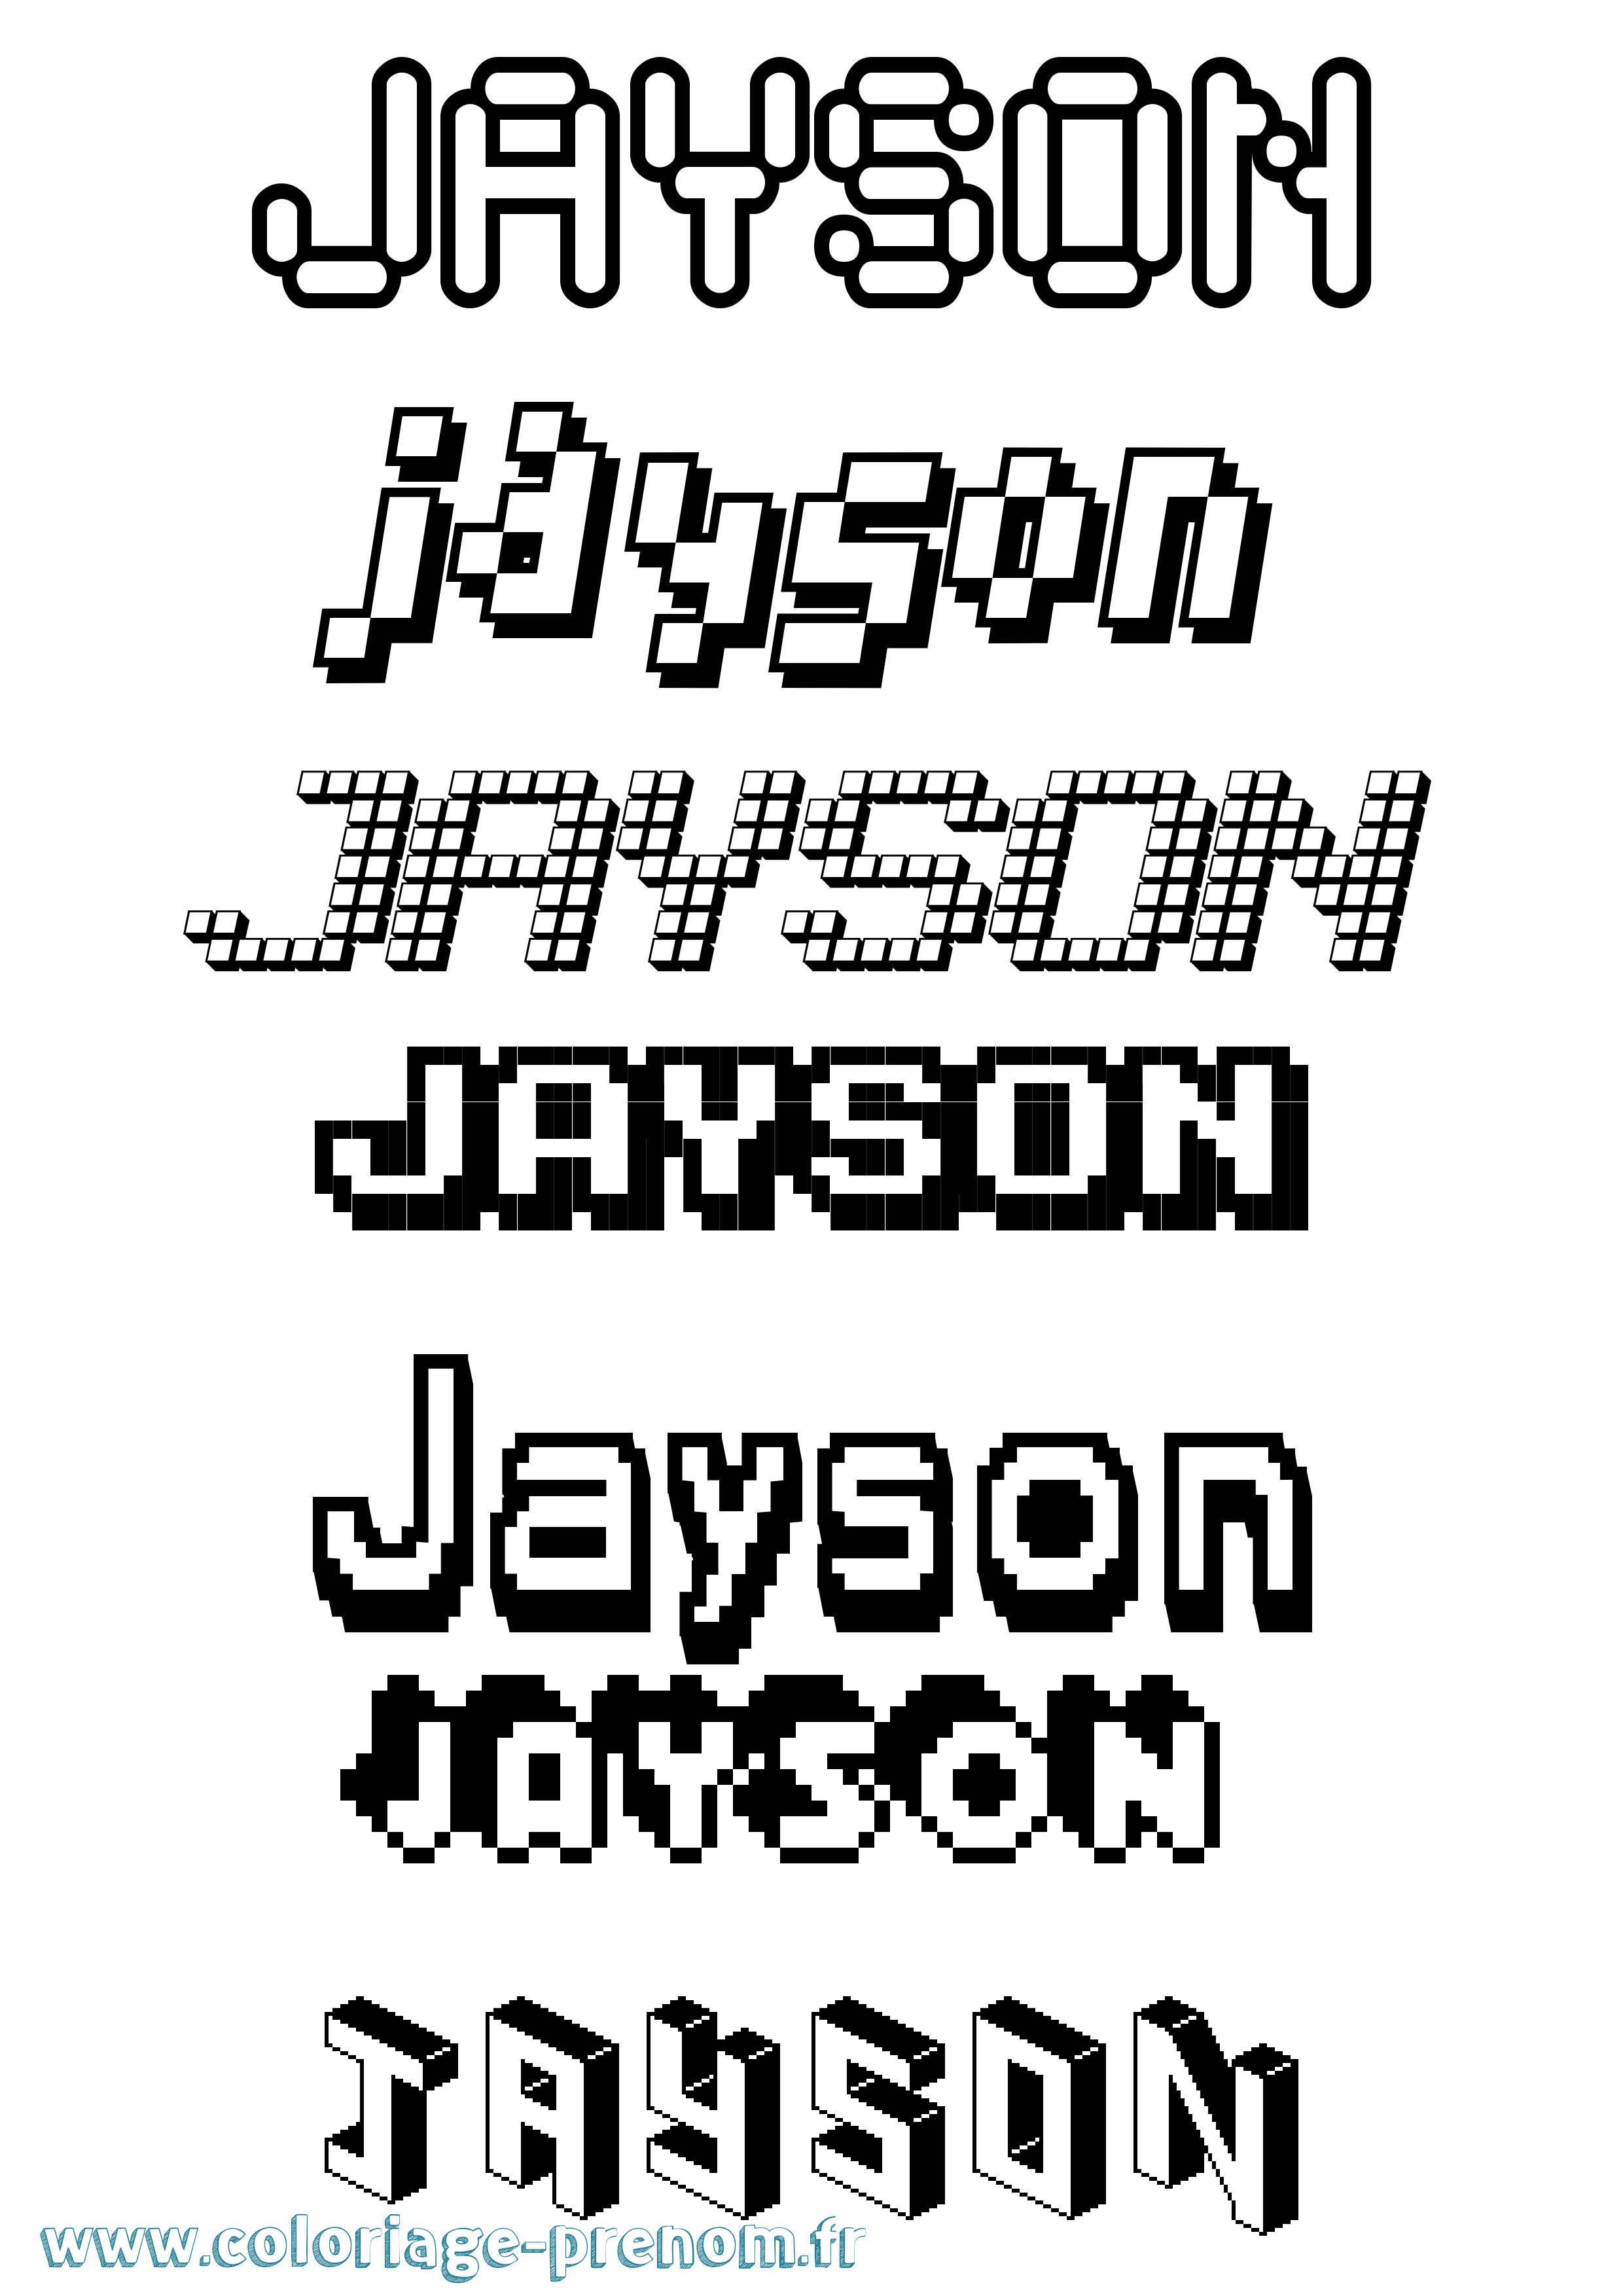 Coloriage prénom Jayson